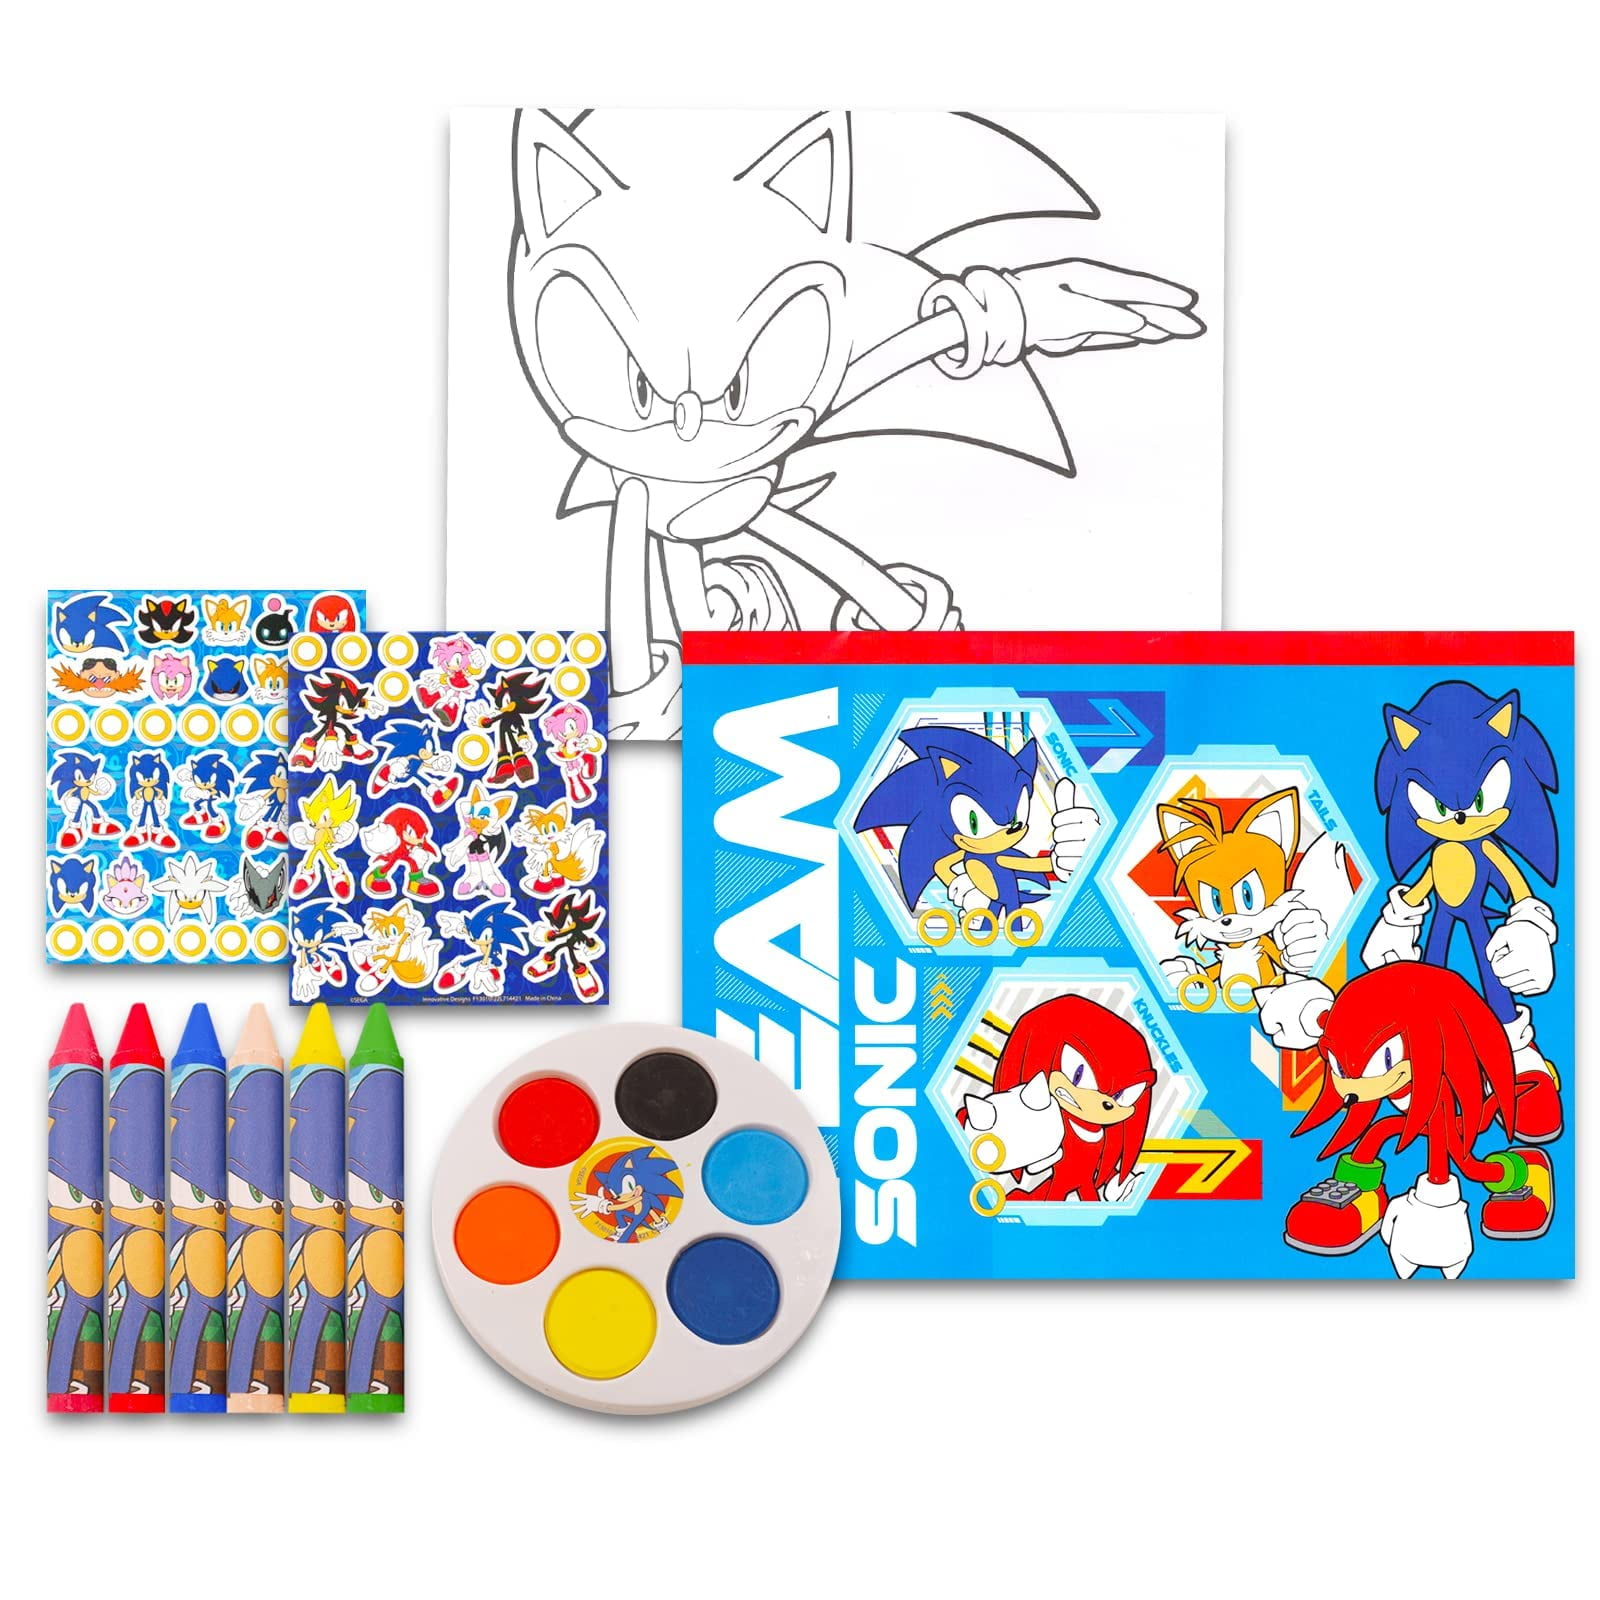 Sonic the hedgehog drawing : r/Jazza